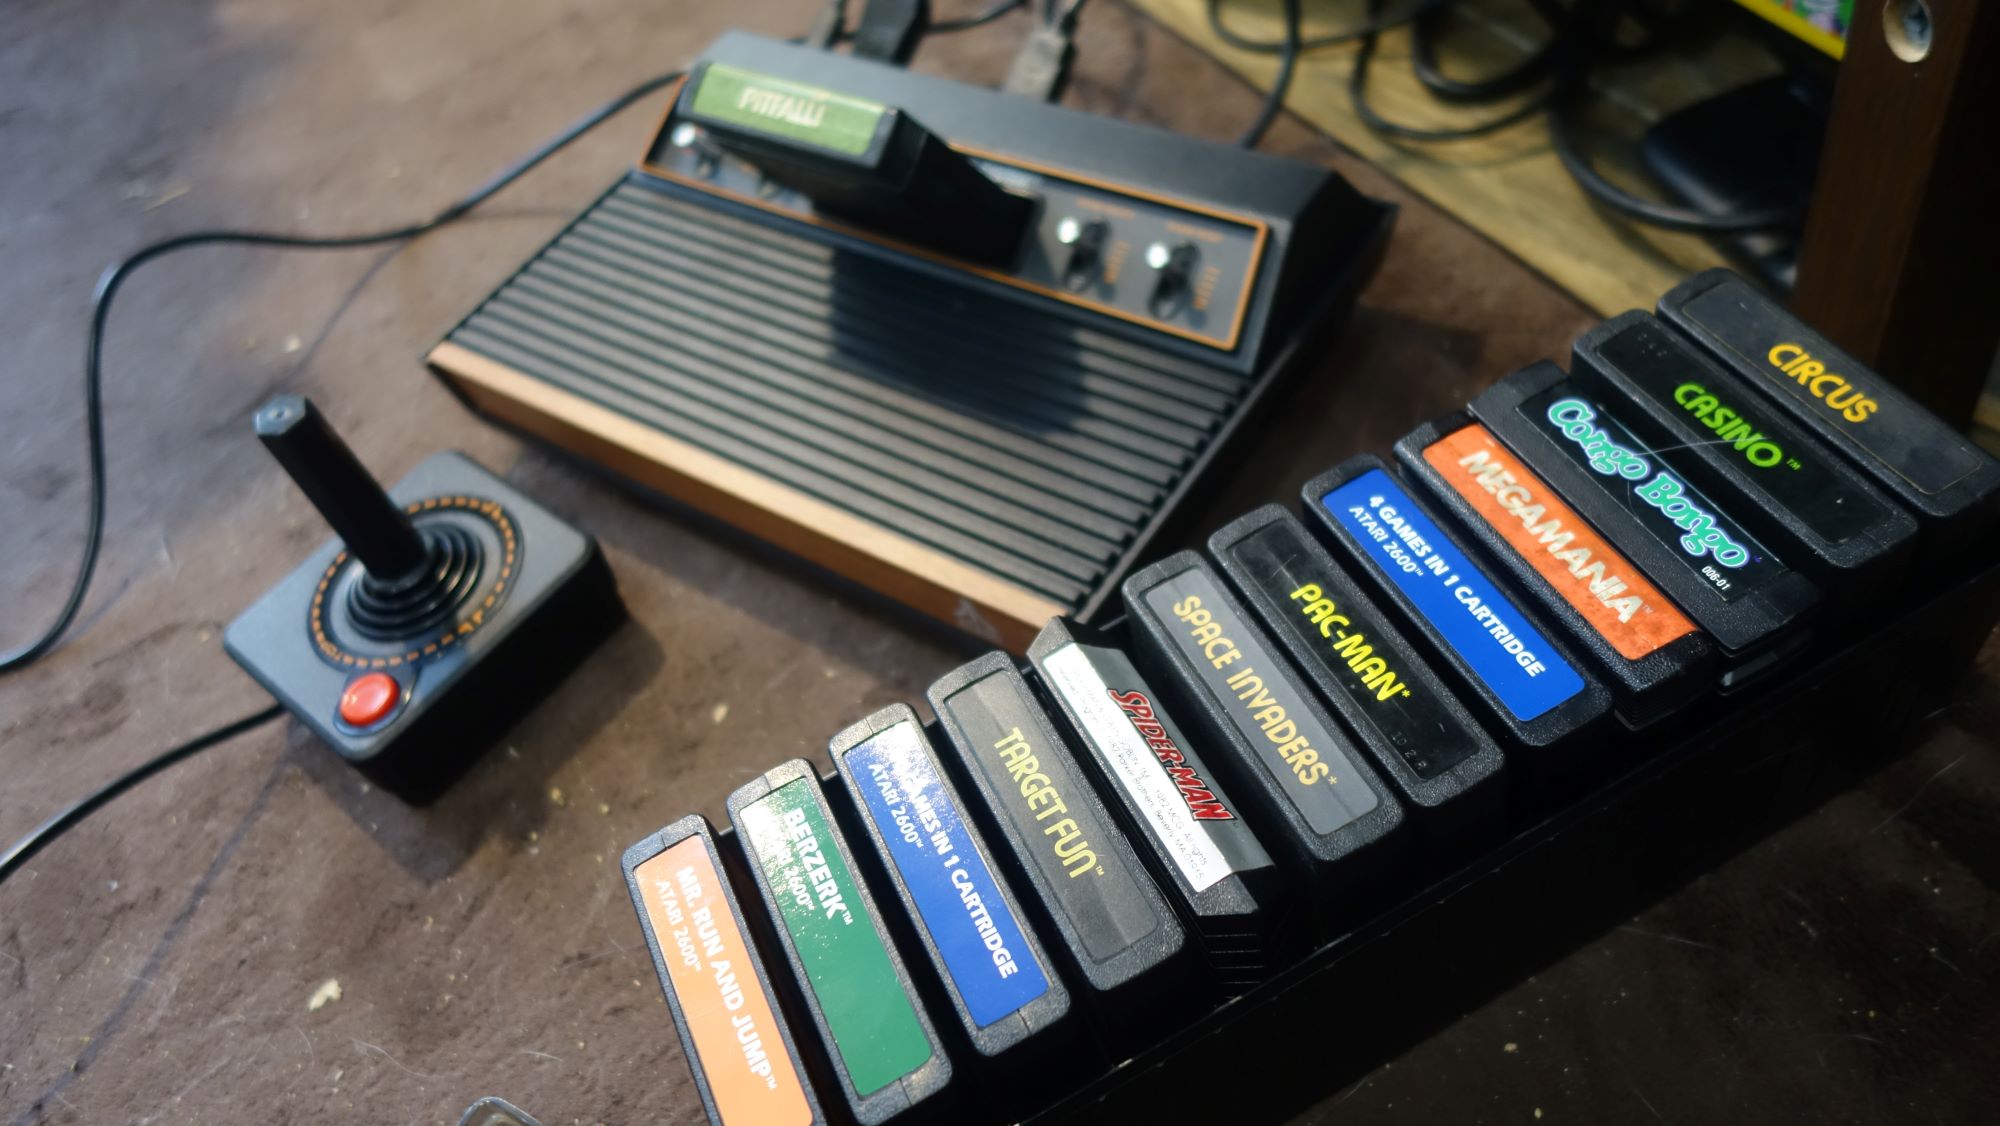 A case full of Atari games sits next to an Atari 2600+.